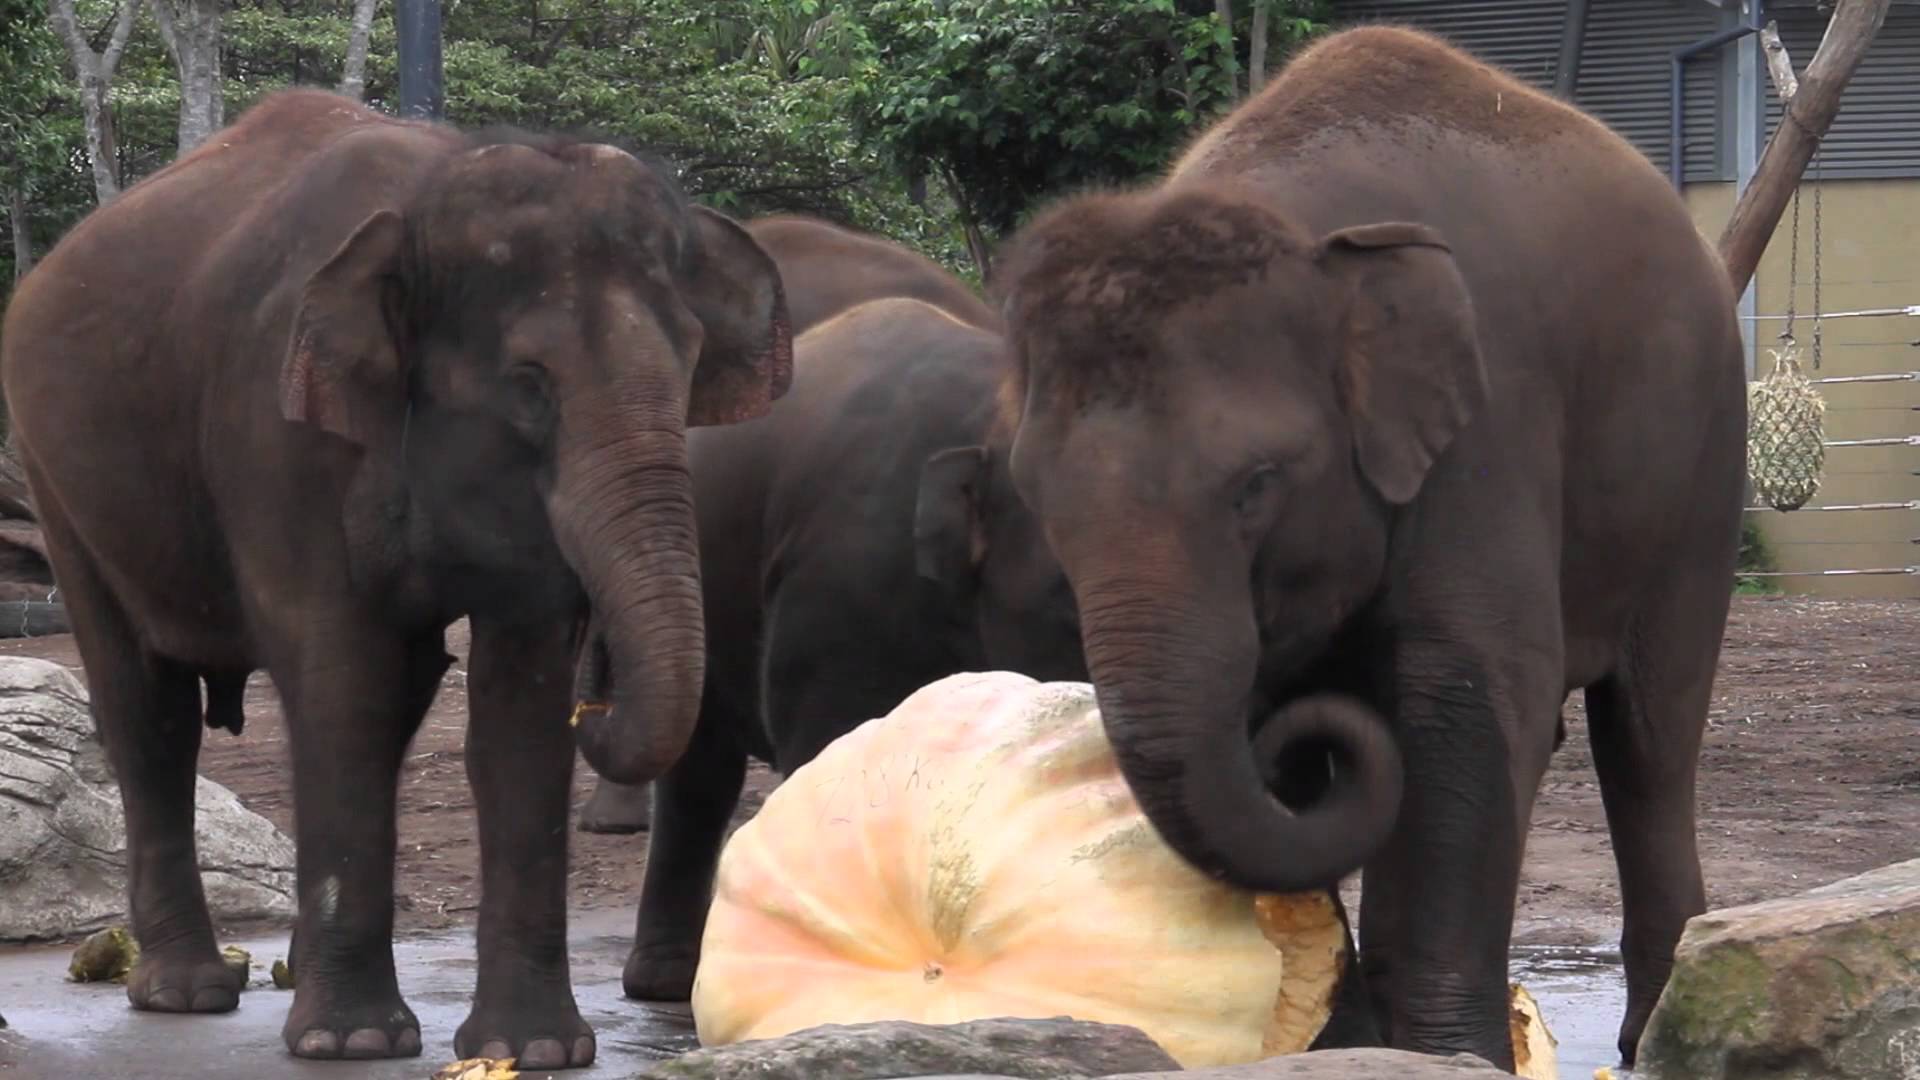 Giant pumpkin on the menu for Taronga's elephants - YouTube